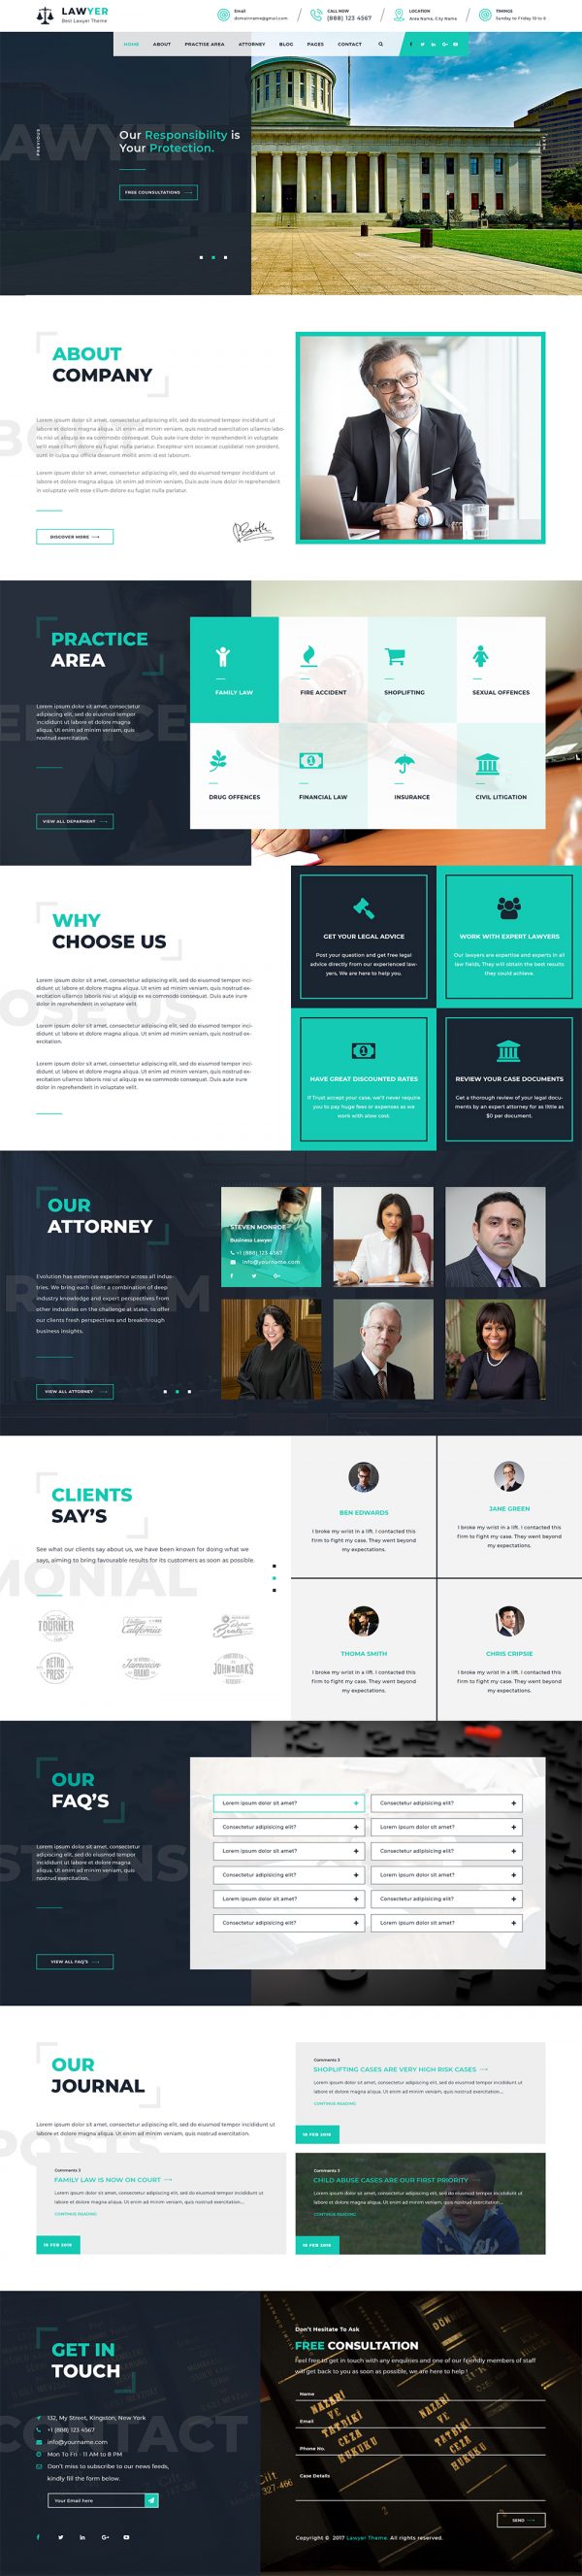 Premium Lawyer WordPress Theme